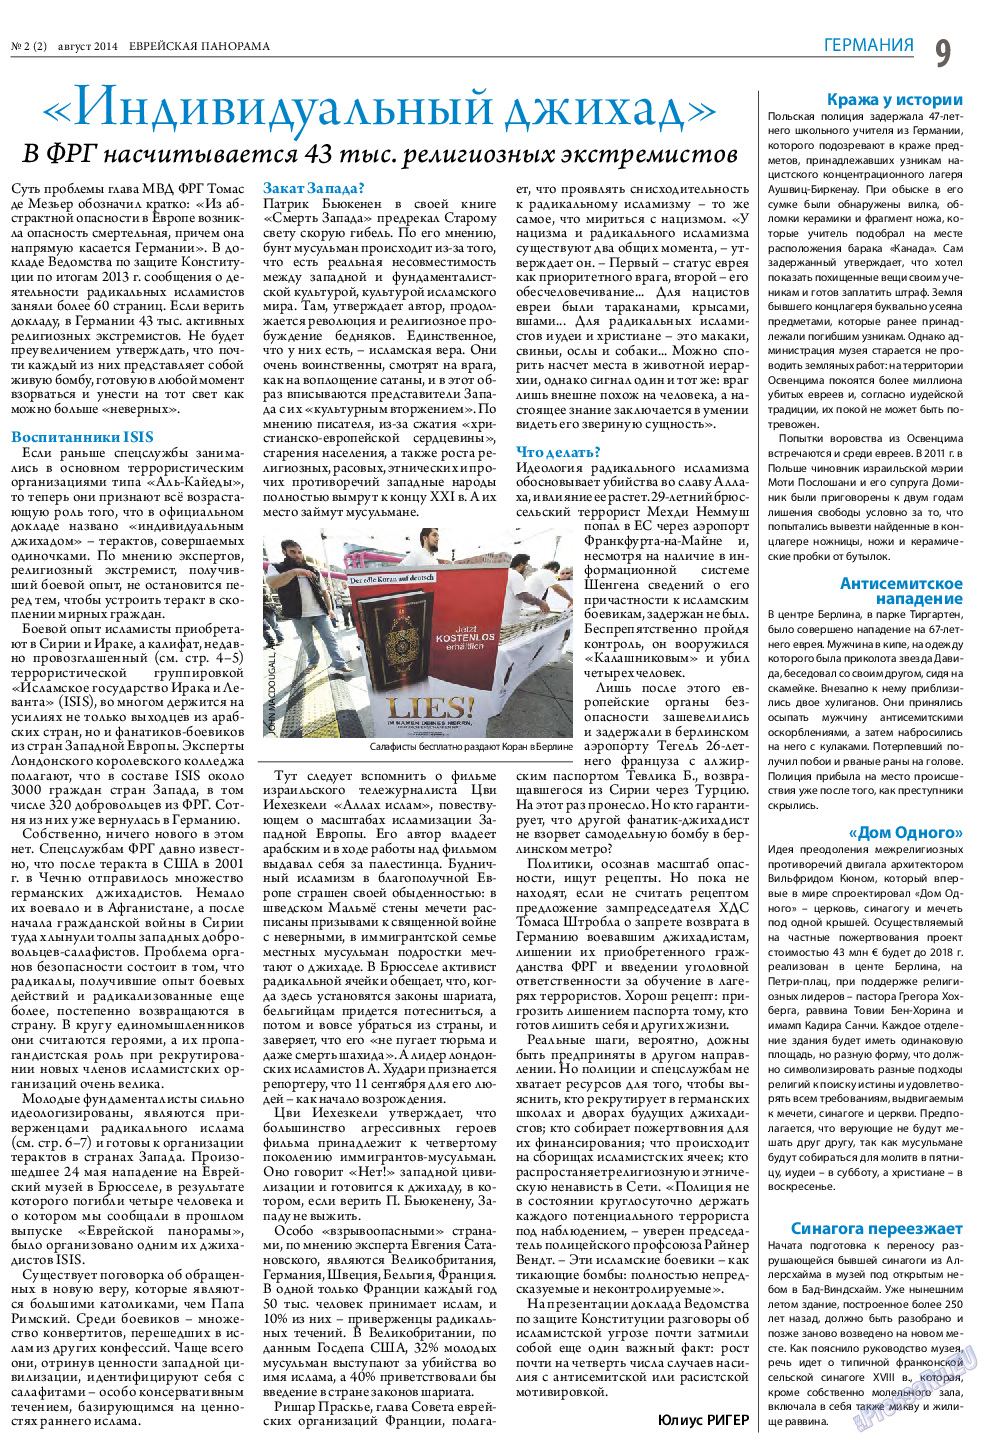 Еврейская панорама, газета. 2014 №2 стр.9